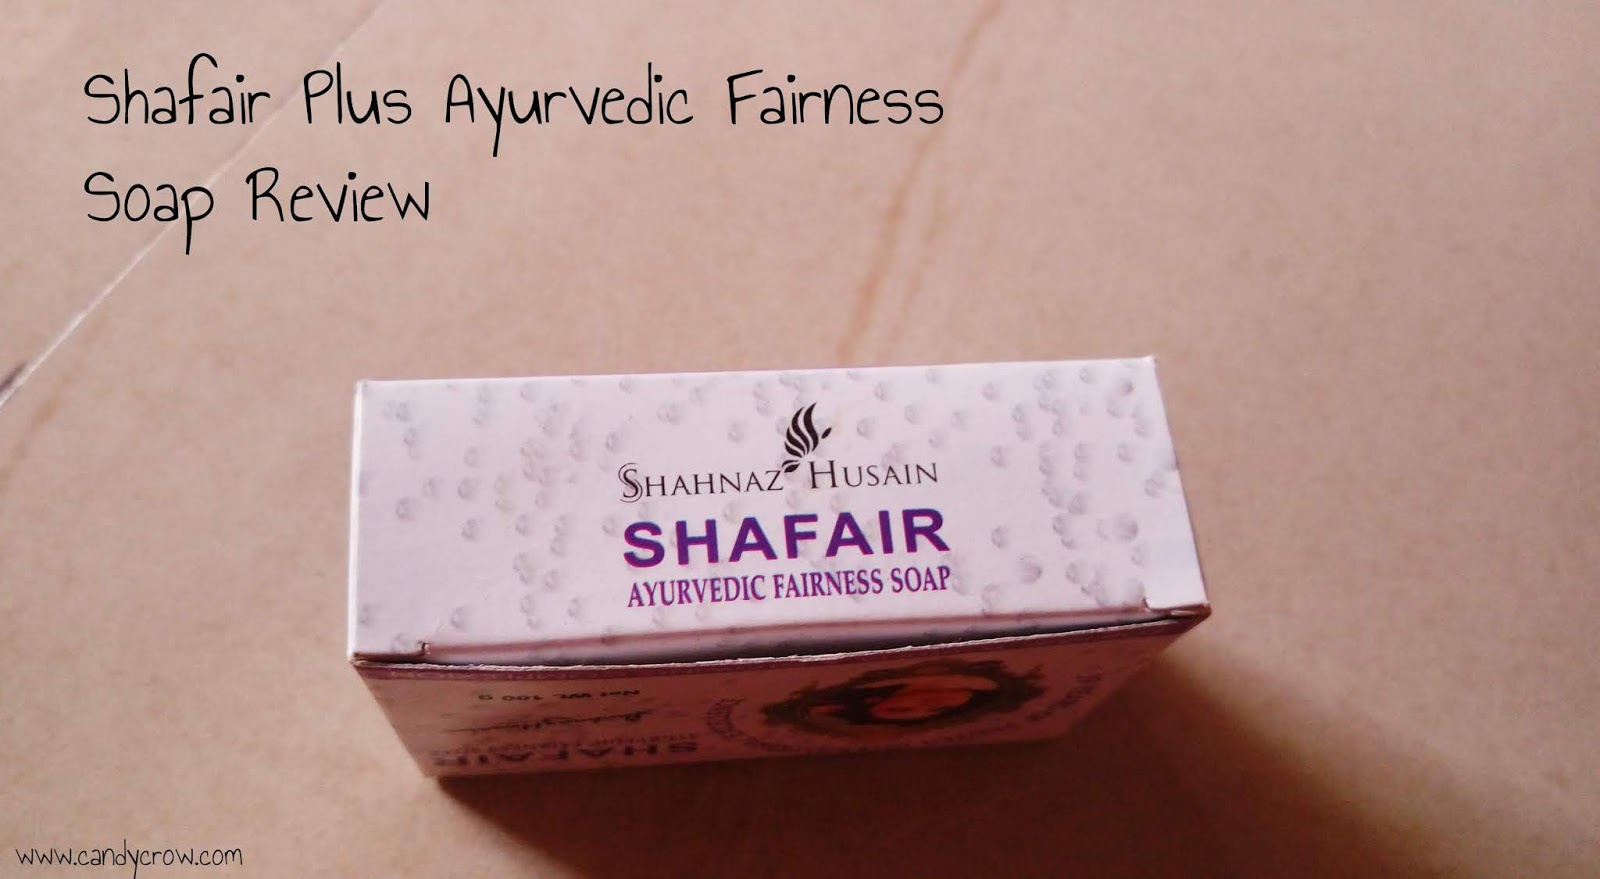 Shahnaz Hussain Shafair Ayurvedic Fairness Soap Review